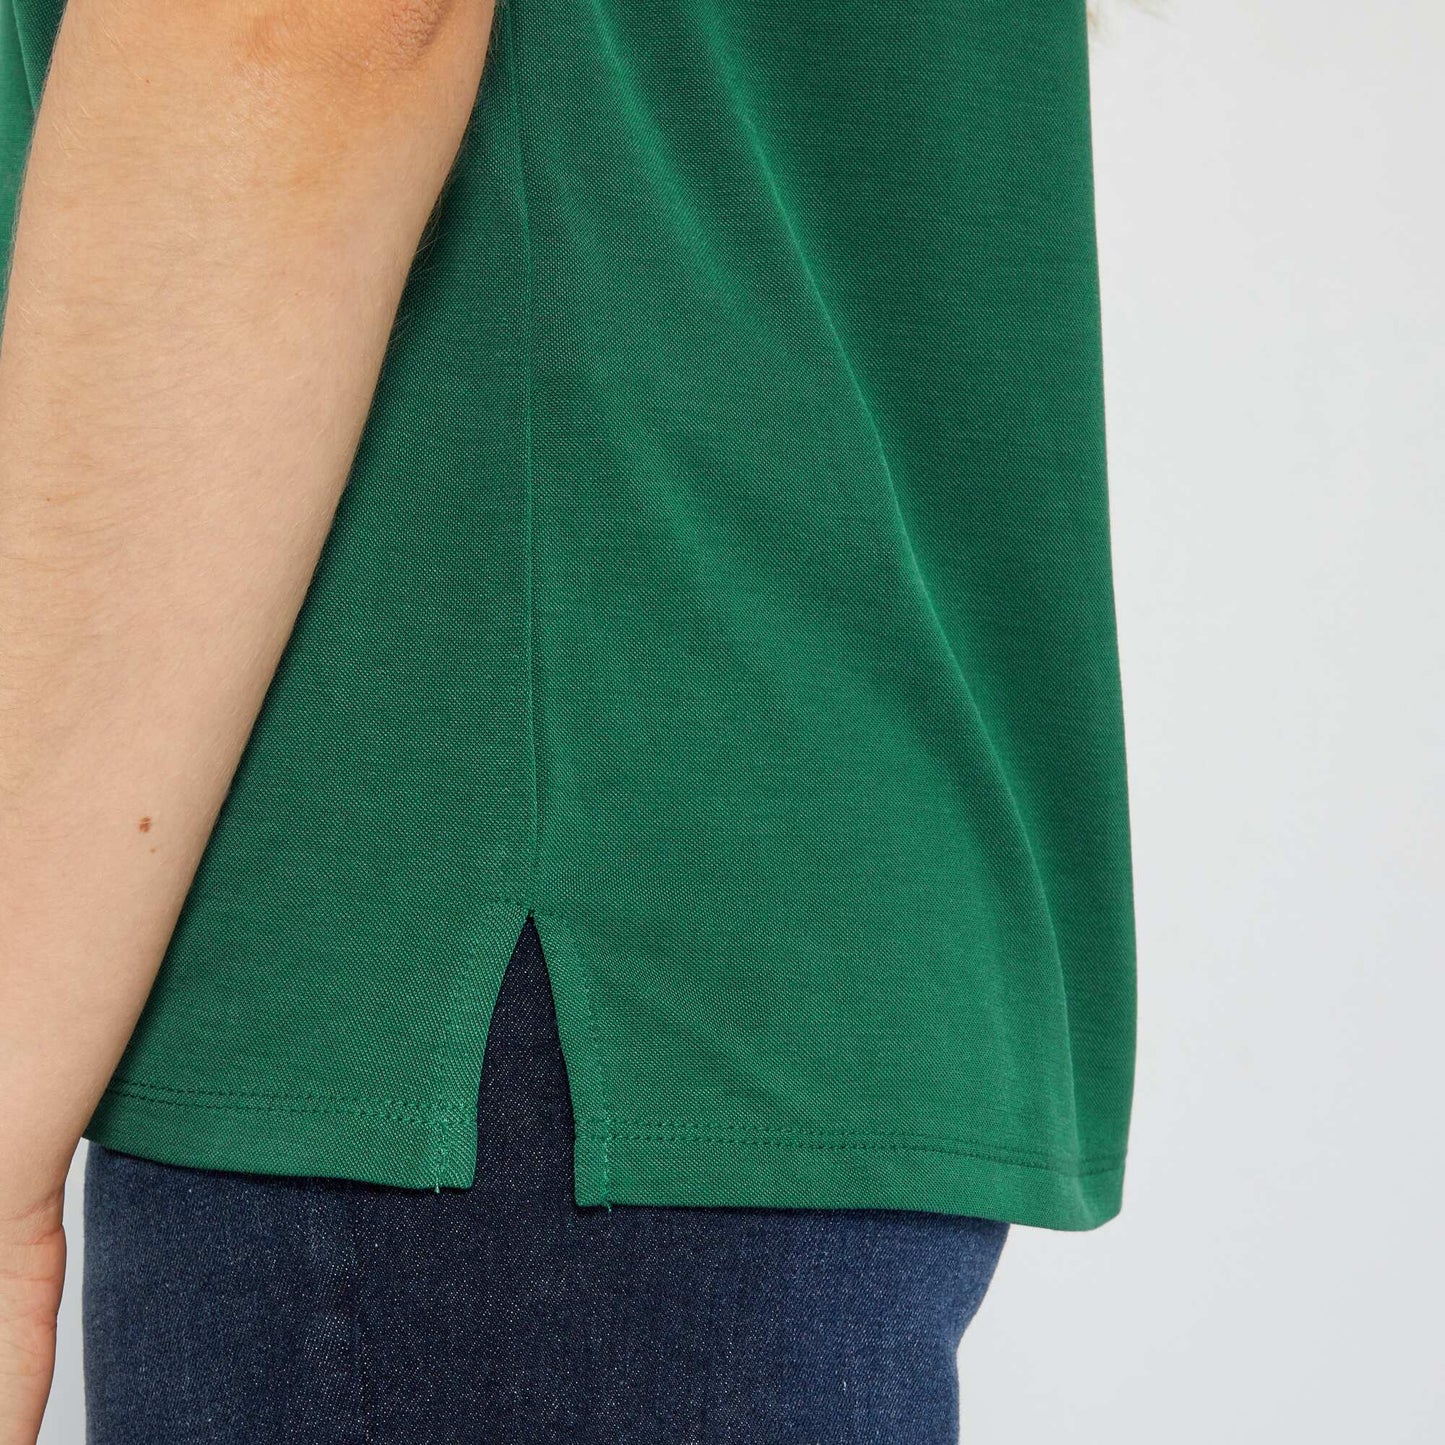 T-shirt manches courtes matière douce Vert